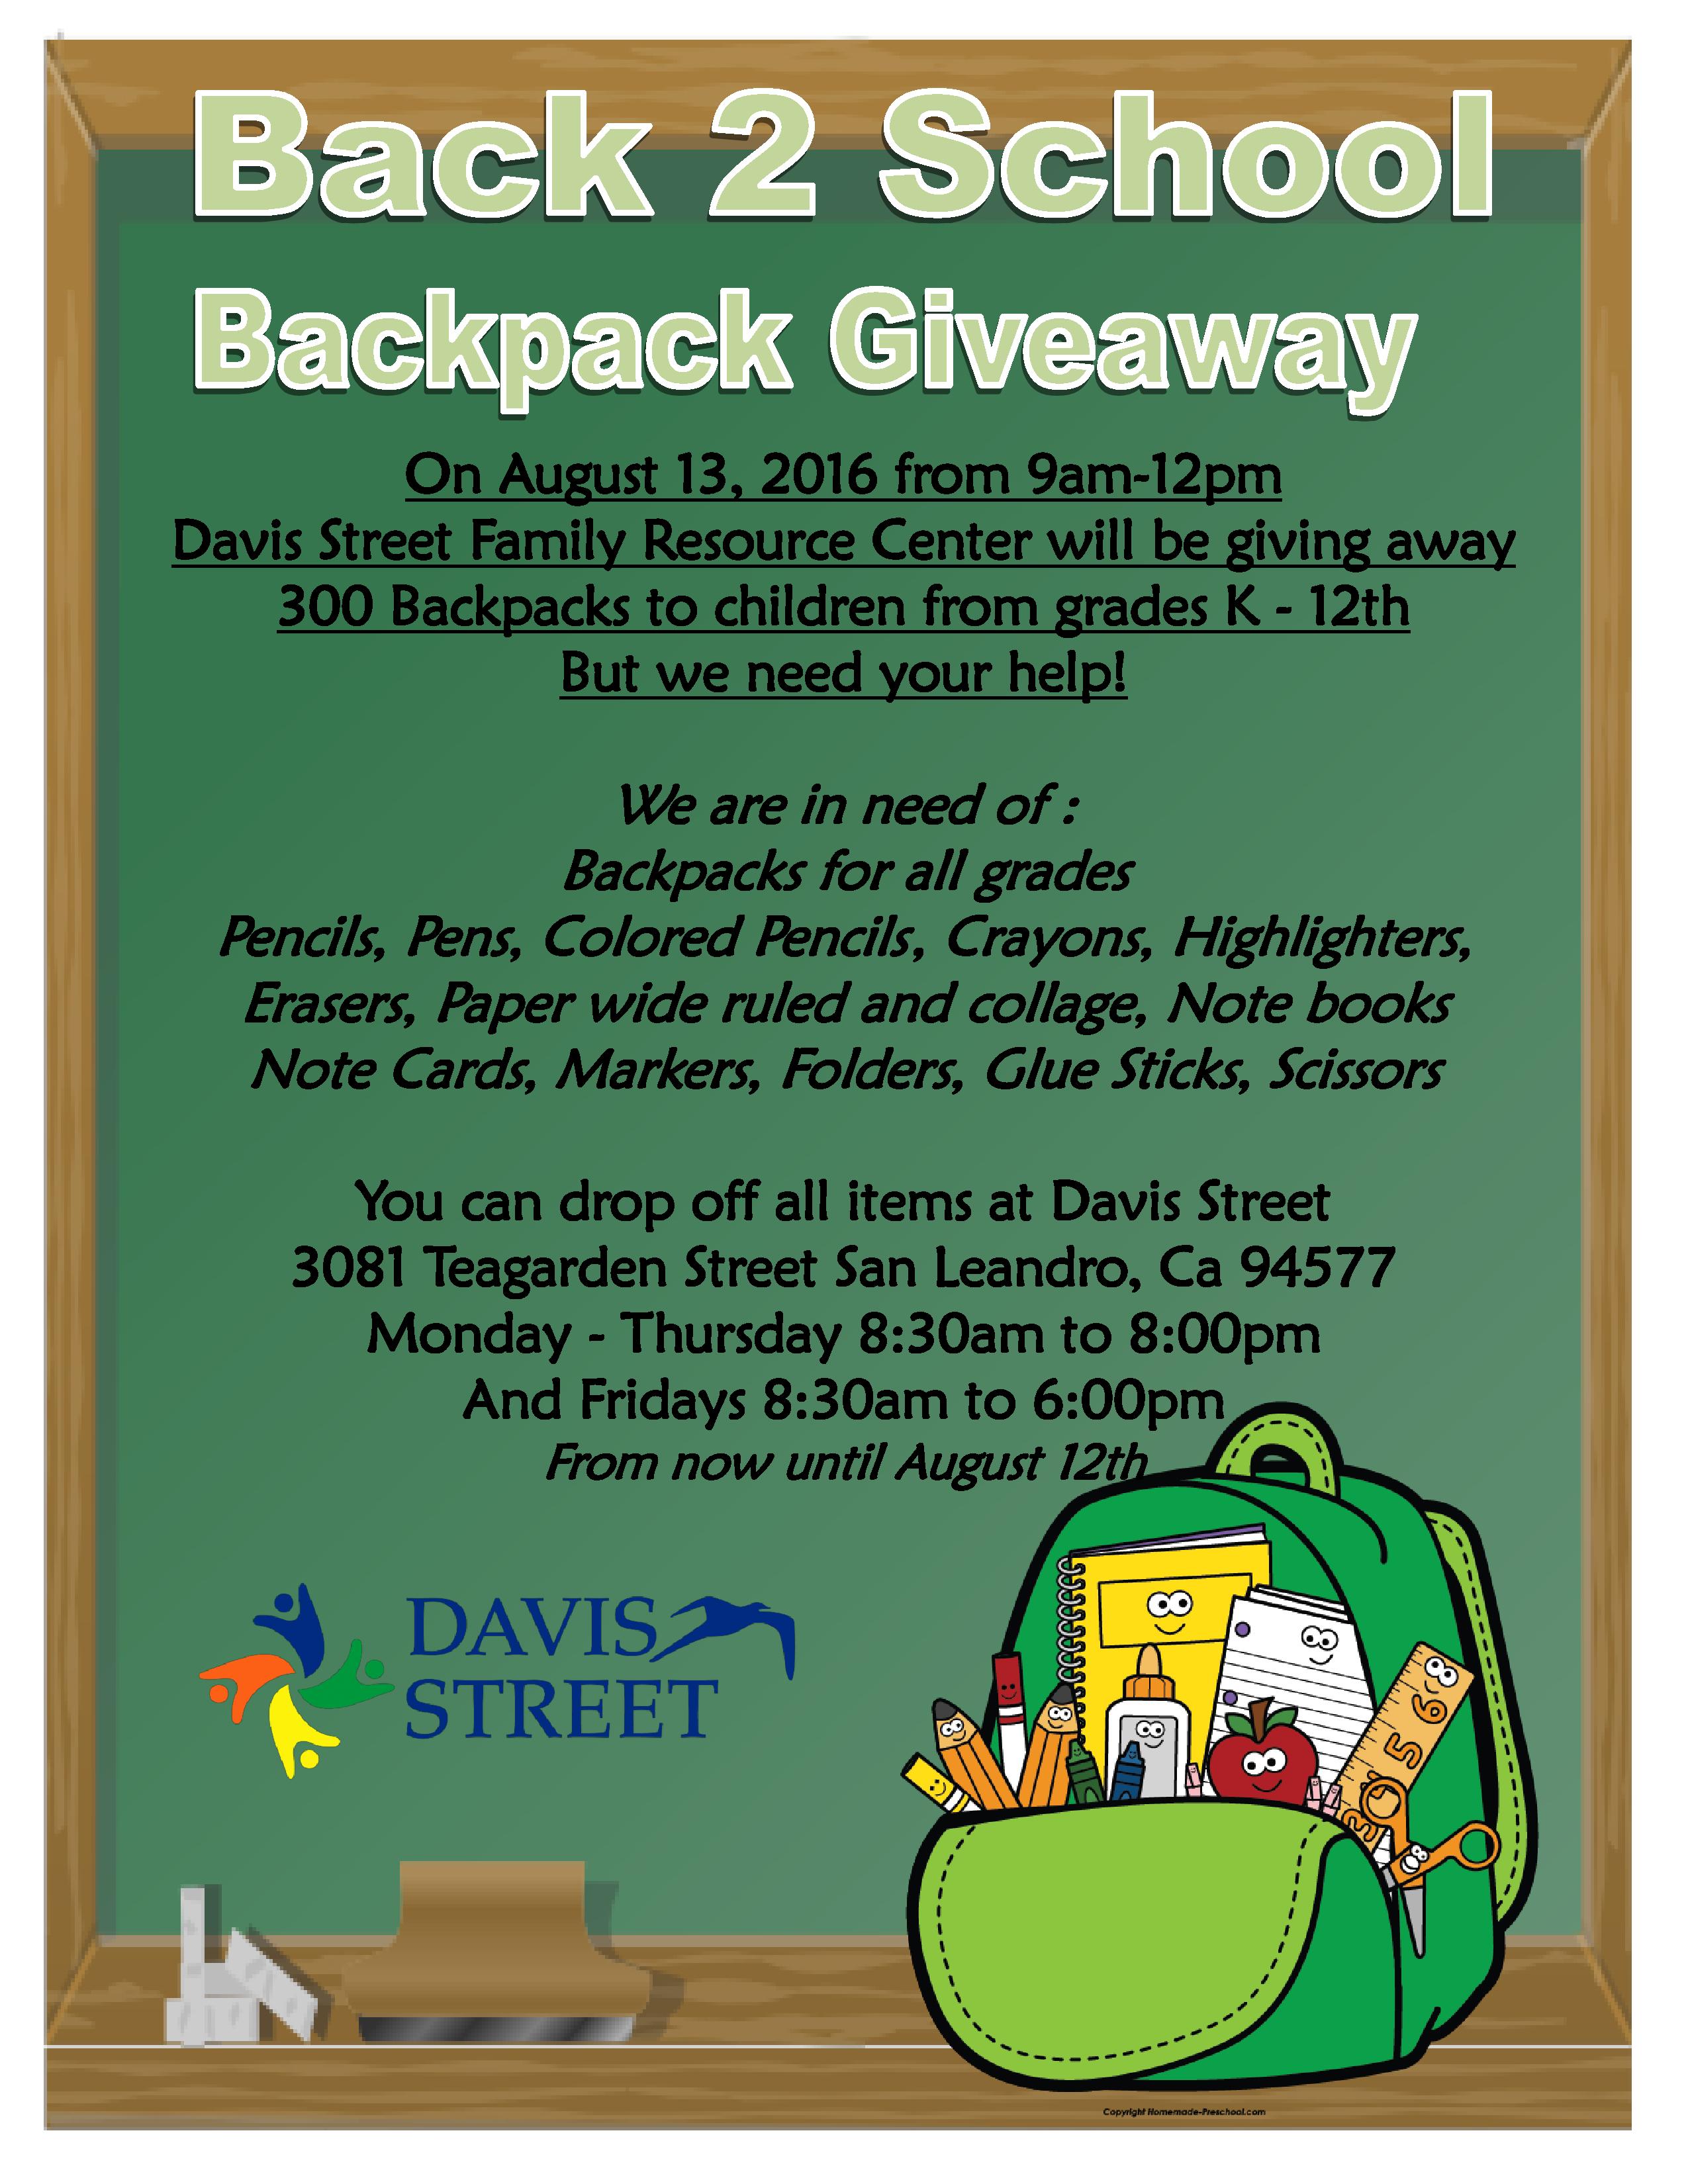 Back 2 School Giveaway is This Saturday! Davis Street